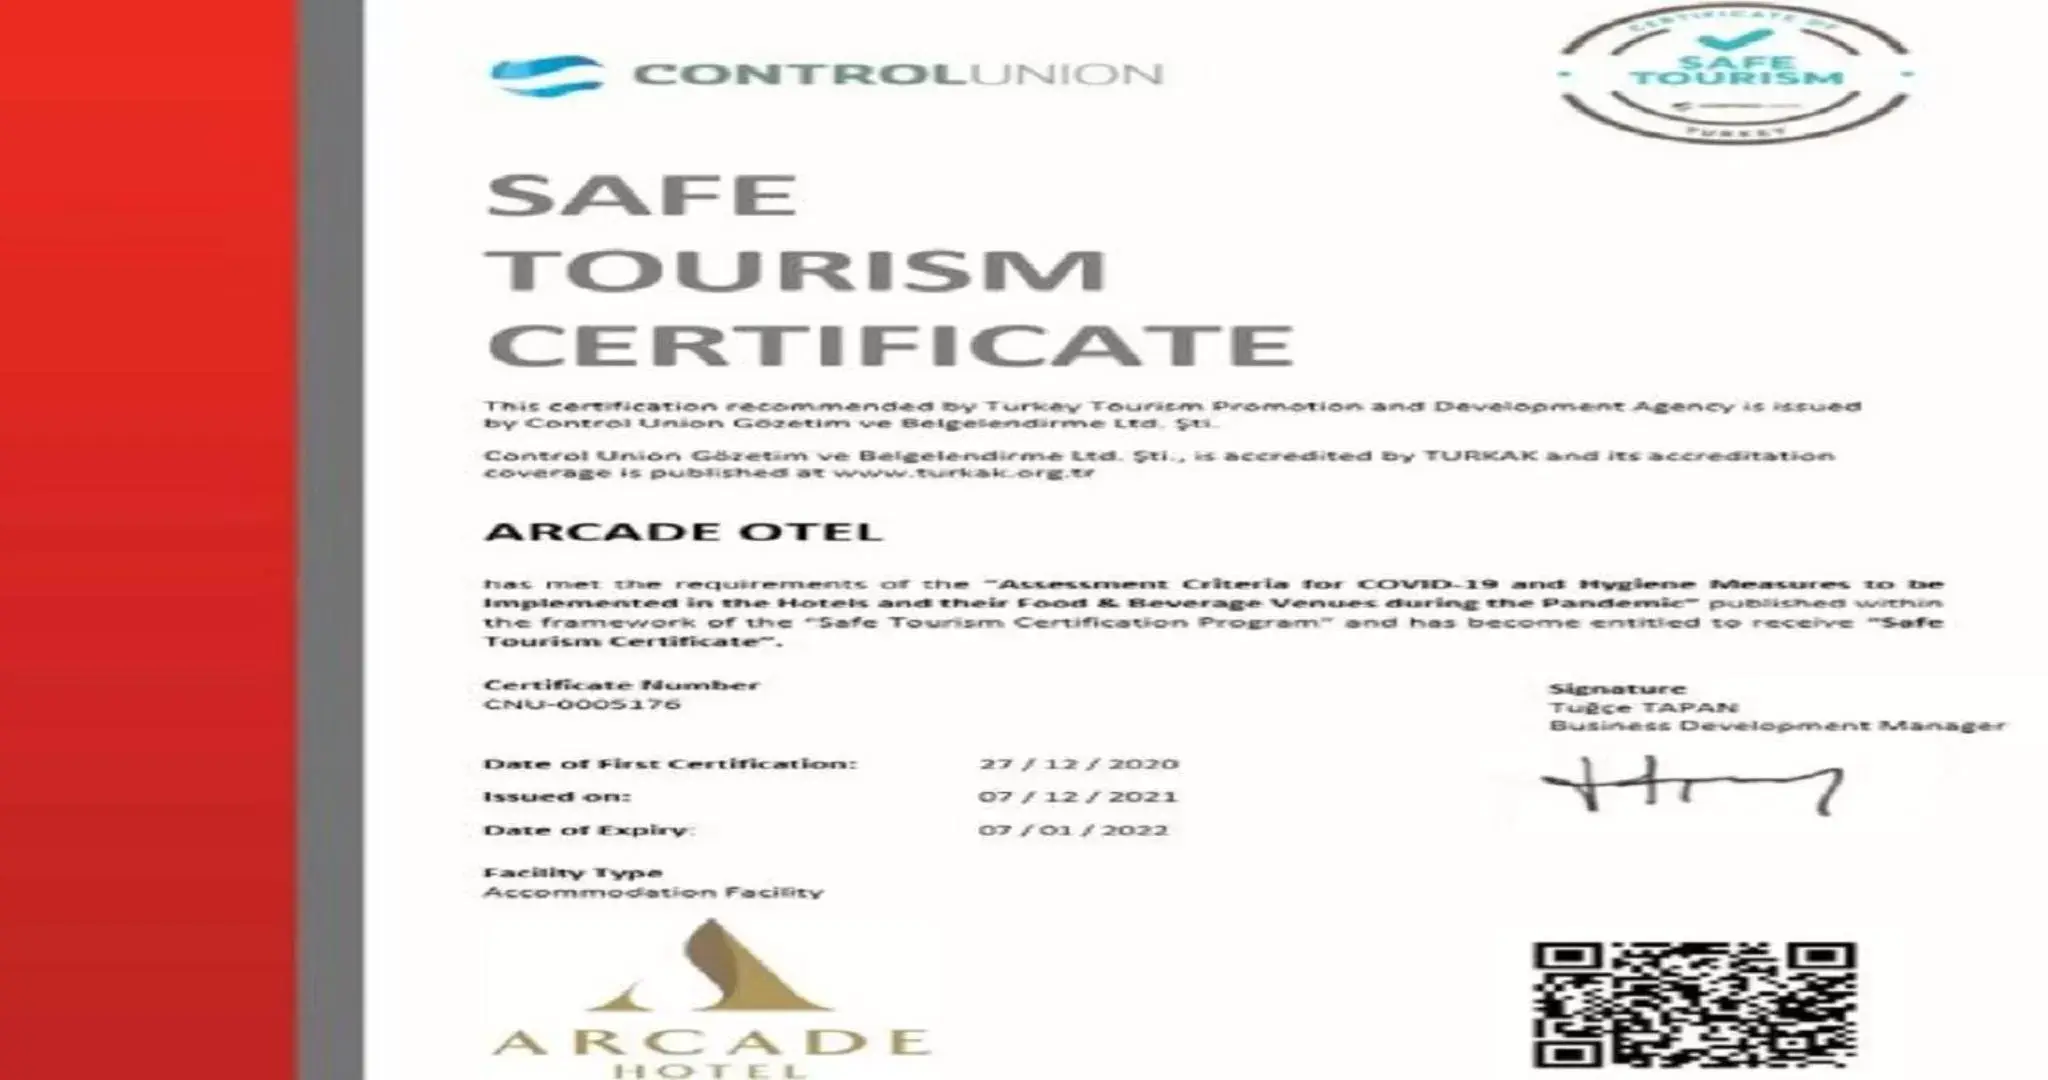 Certificate/Award in Arcade Hotel Istanbul